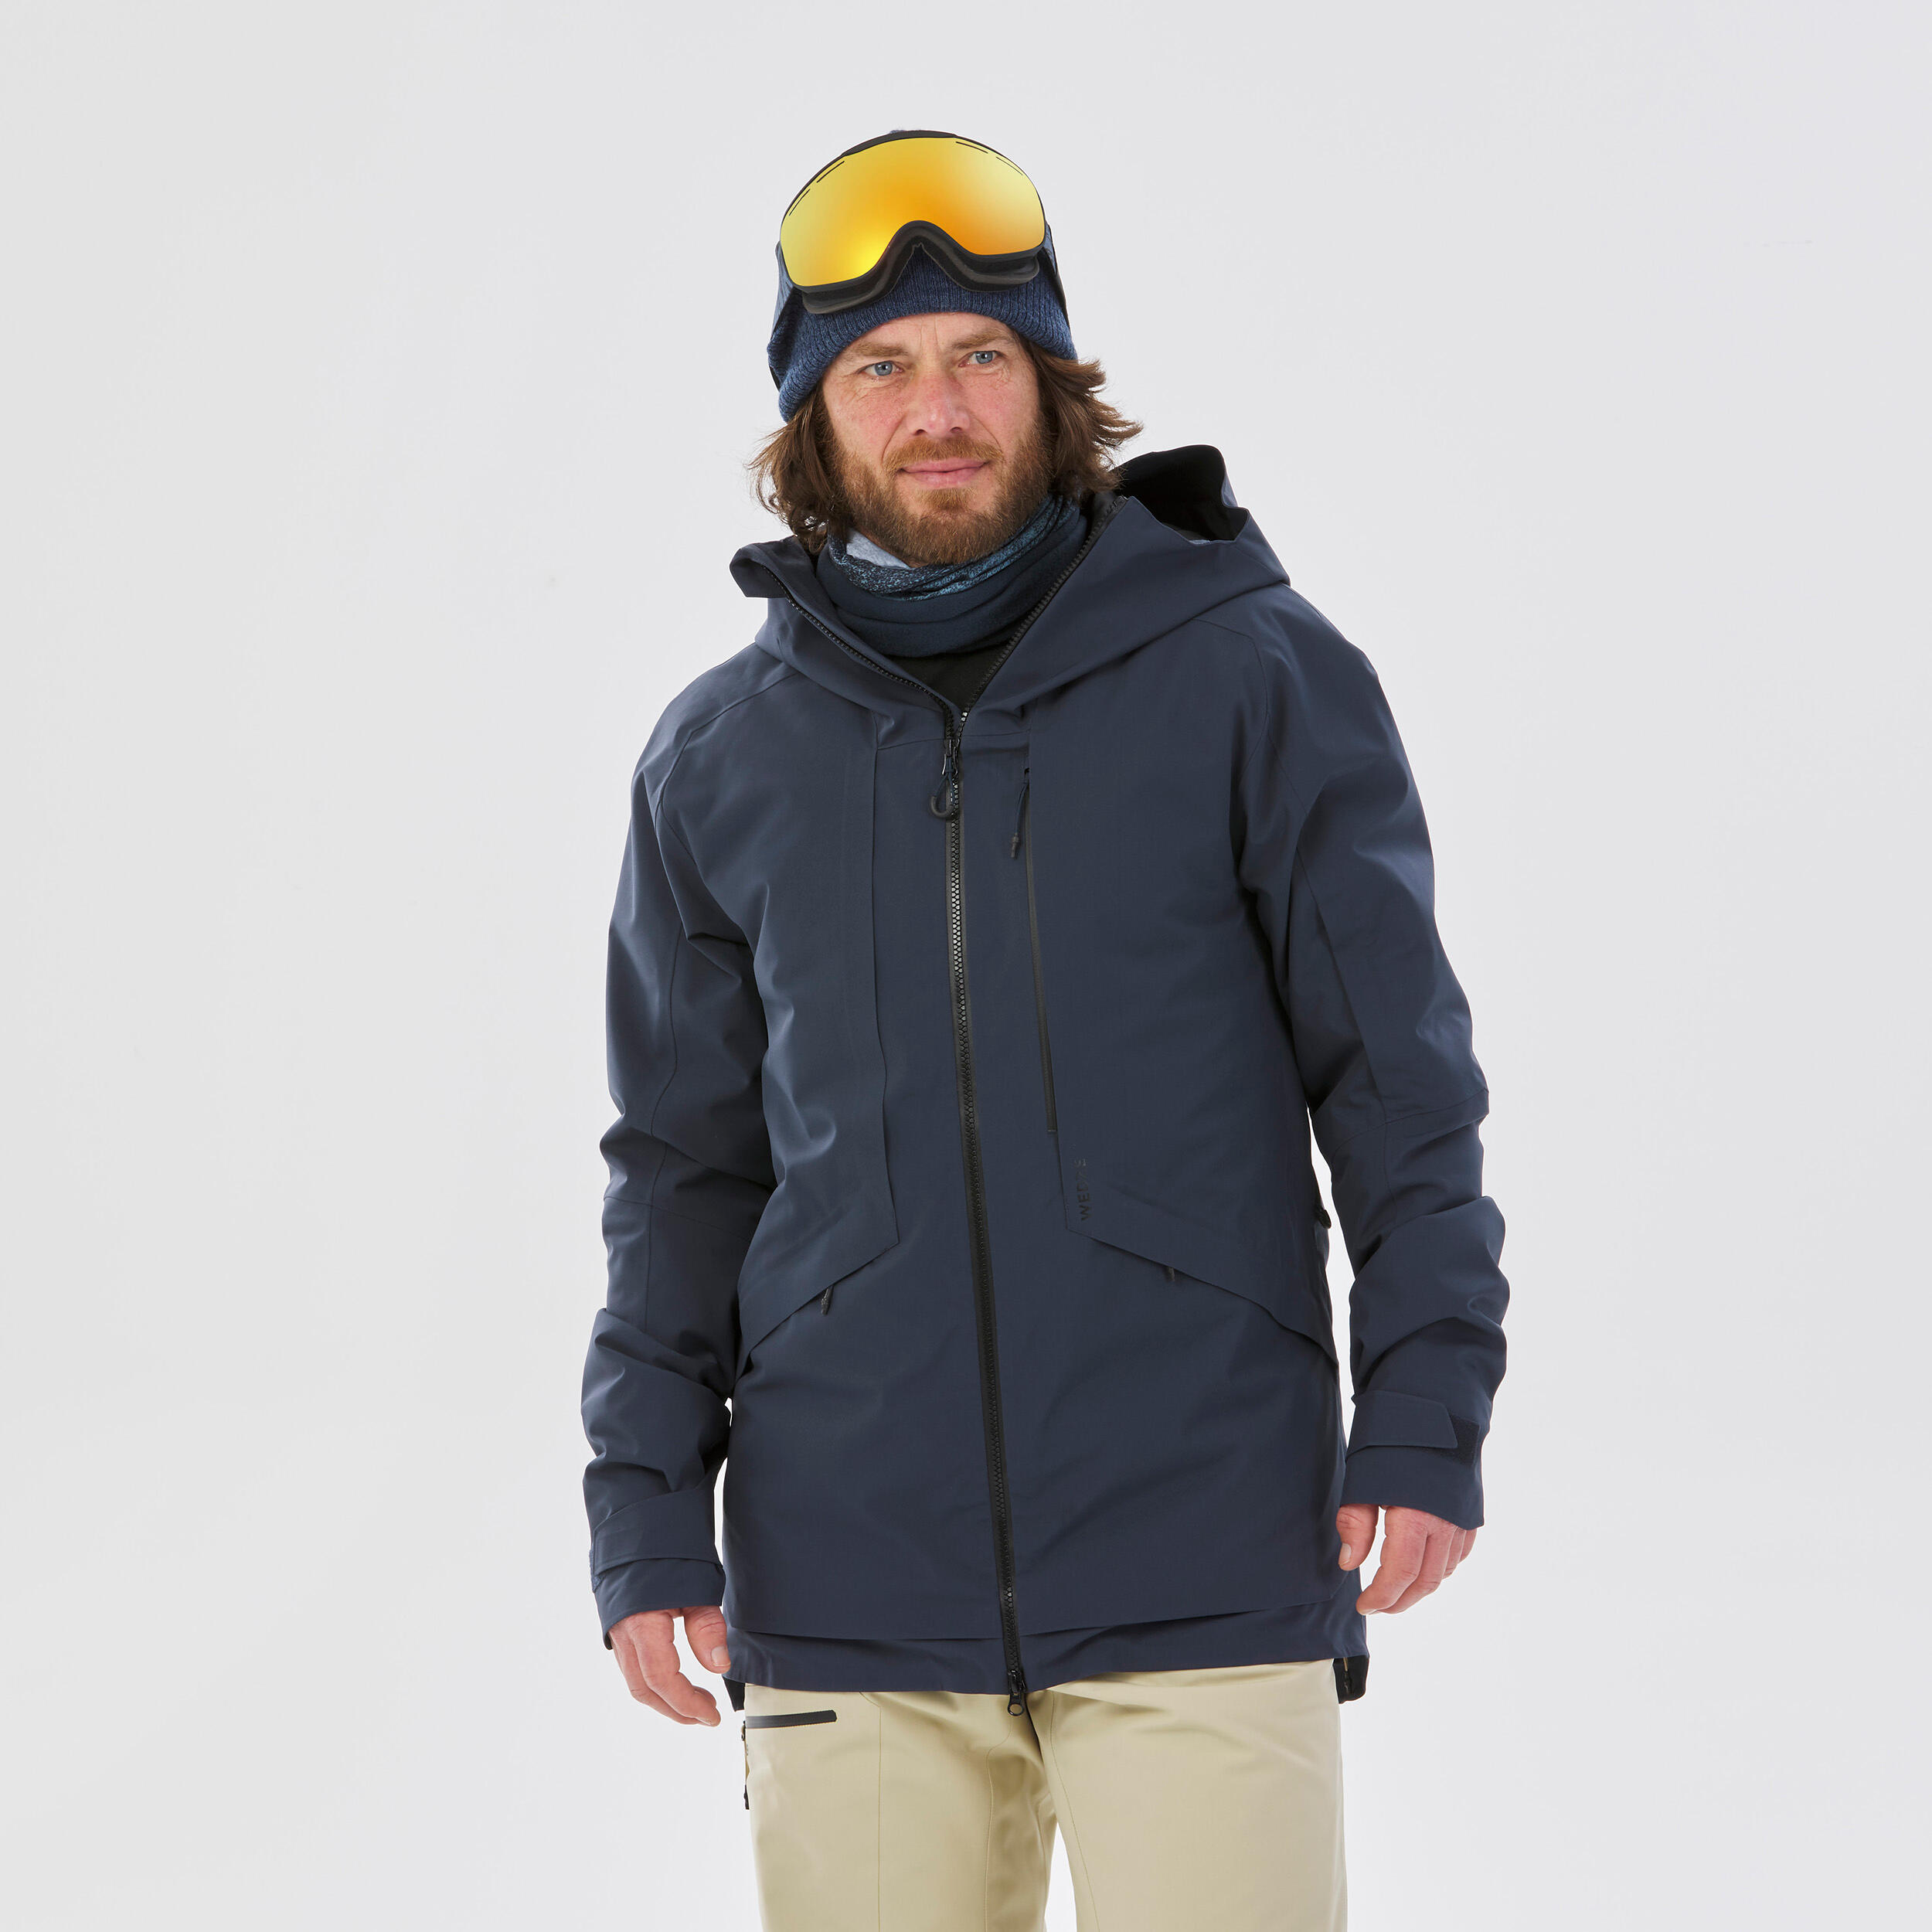 & Badmode Skikleding Skipakken Savognin Mn Ski Jckt B functionele jas met afritsbare capuchon en sneeuwvanger Amazon Heren Sport 